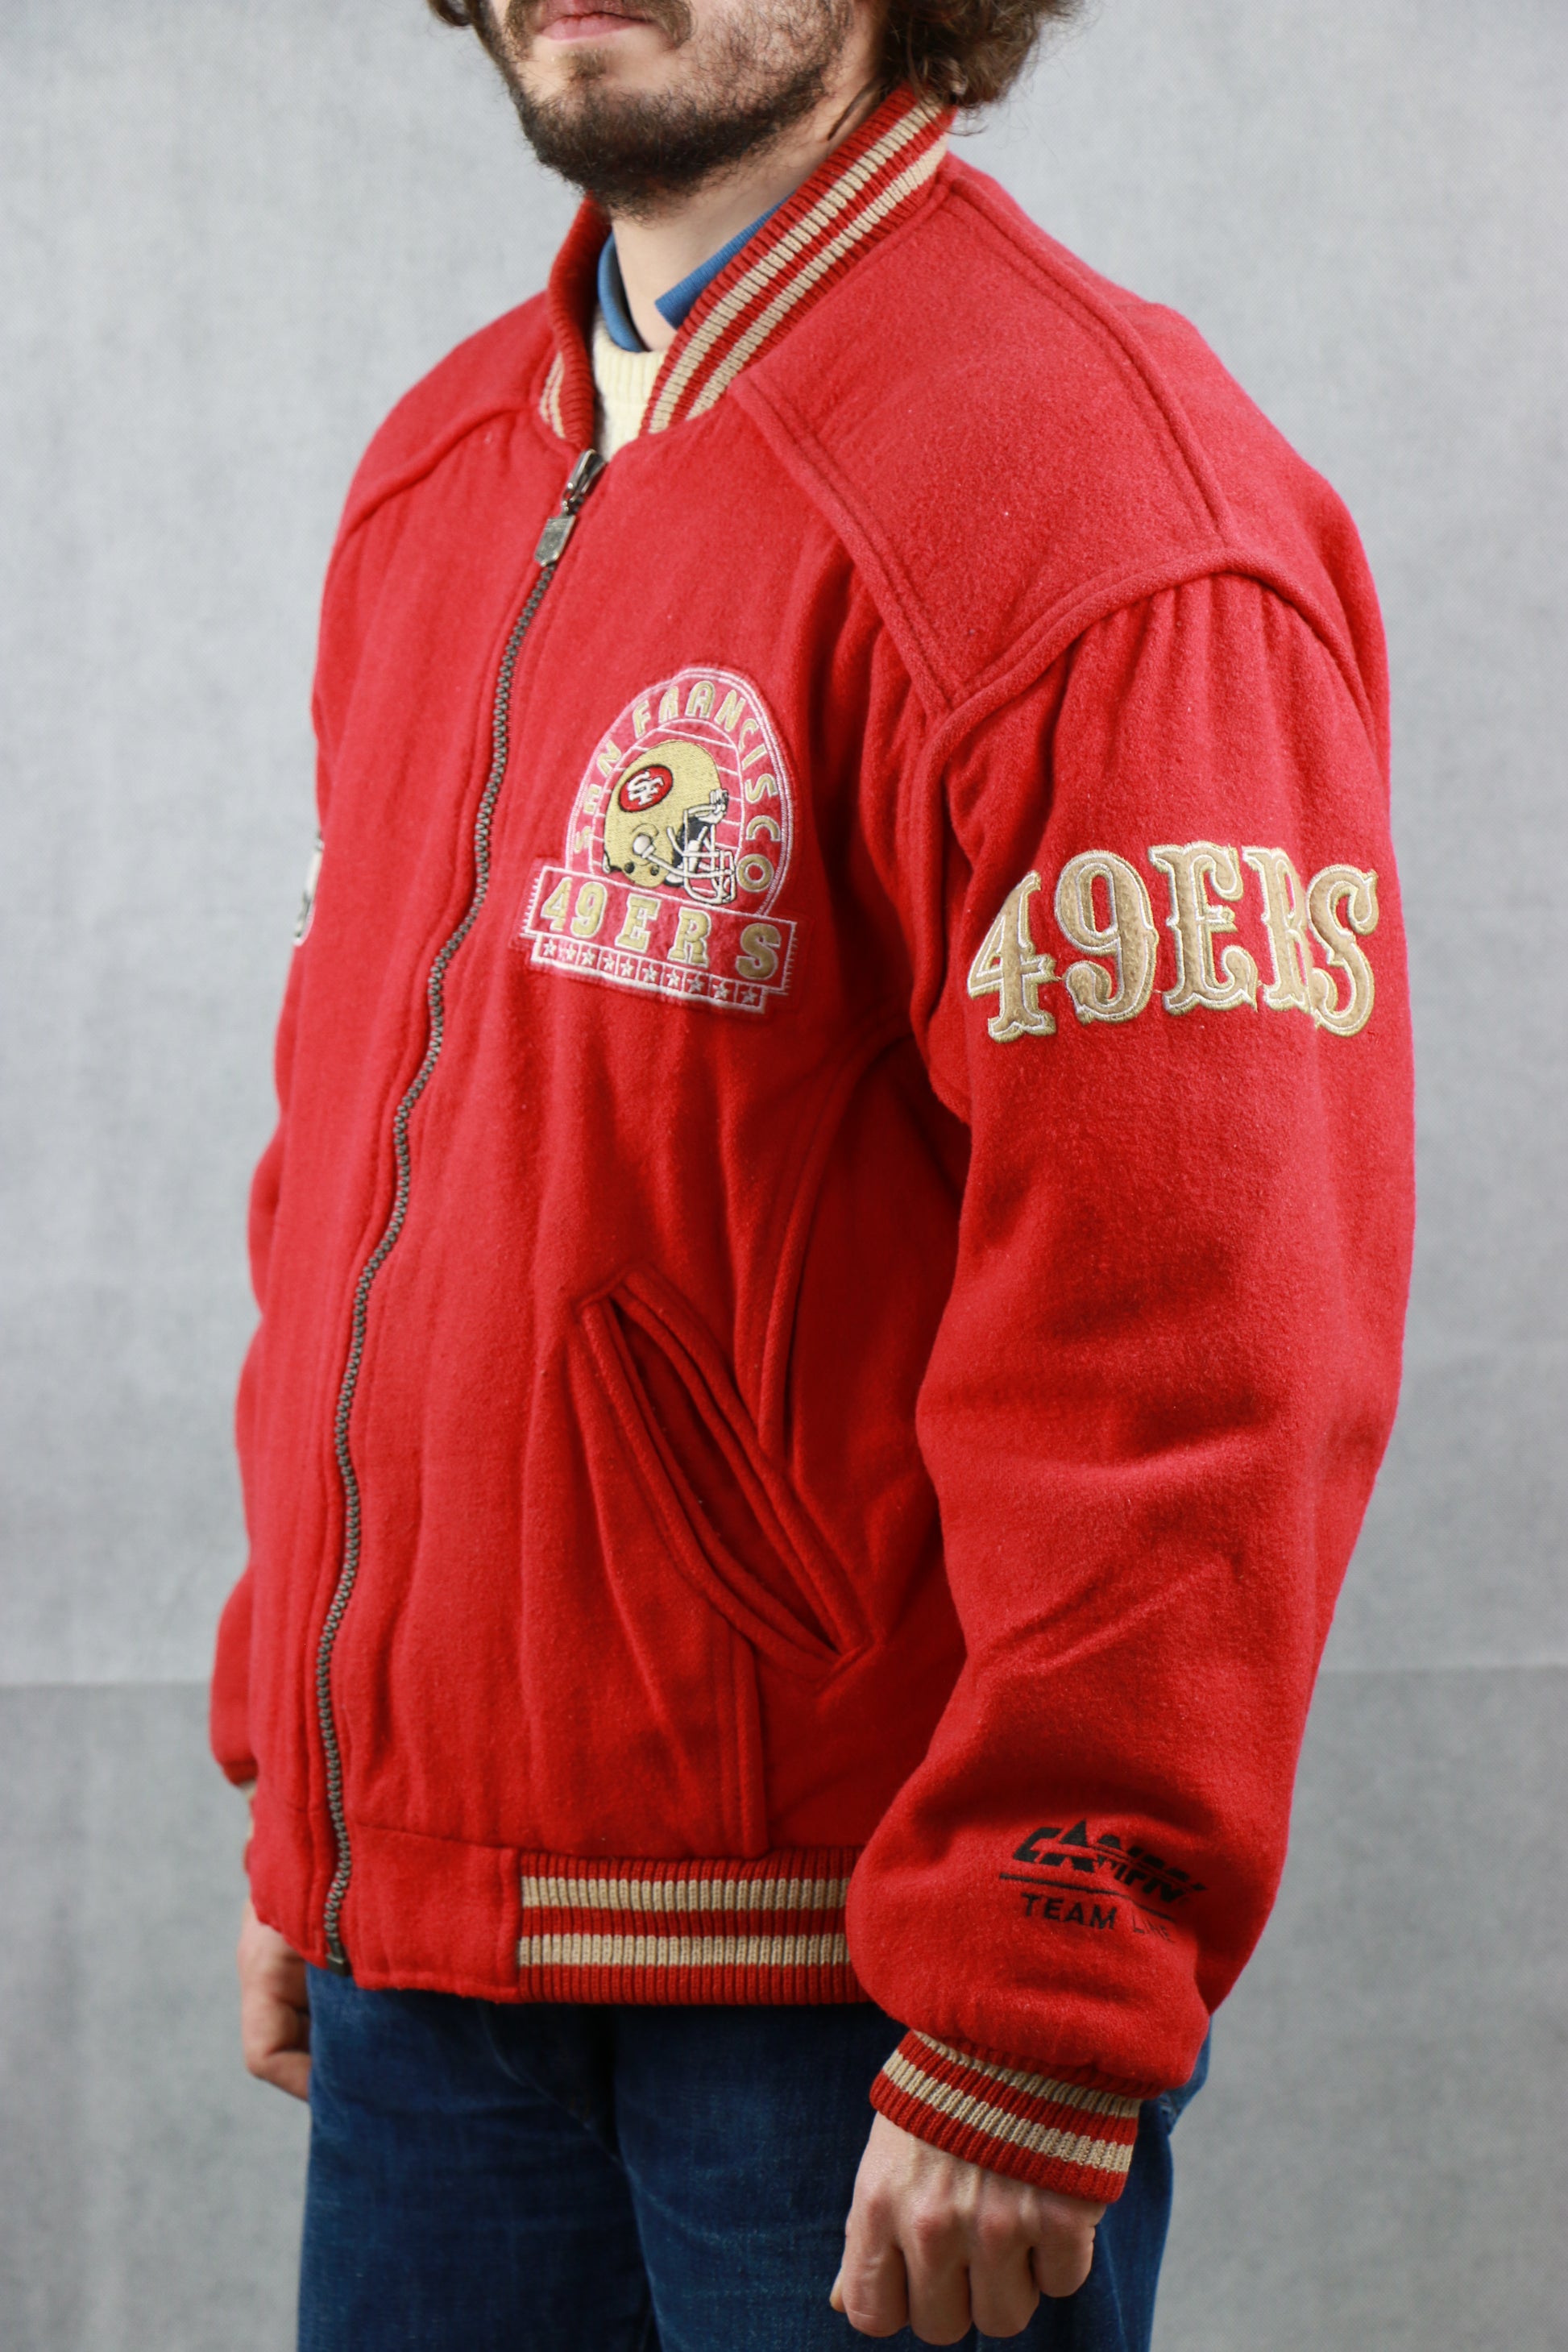 NFL Varsity Jacket, clochard92.com